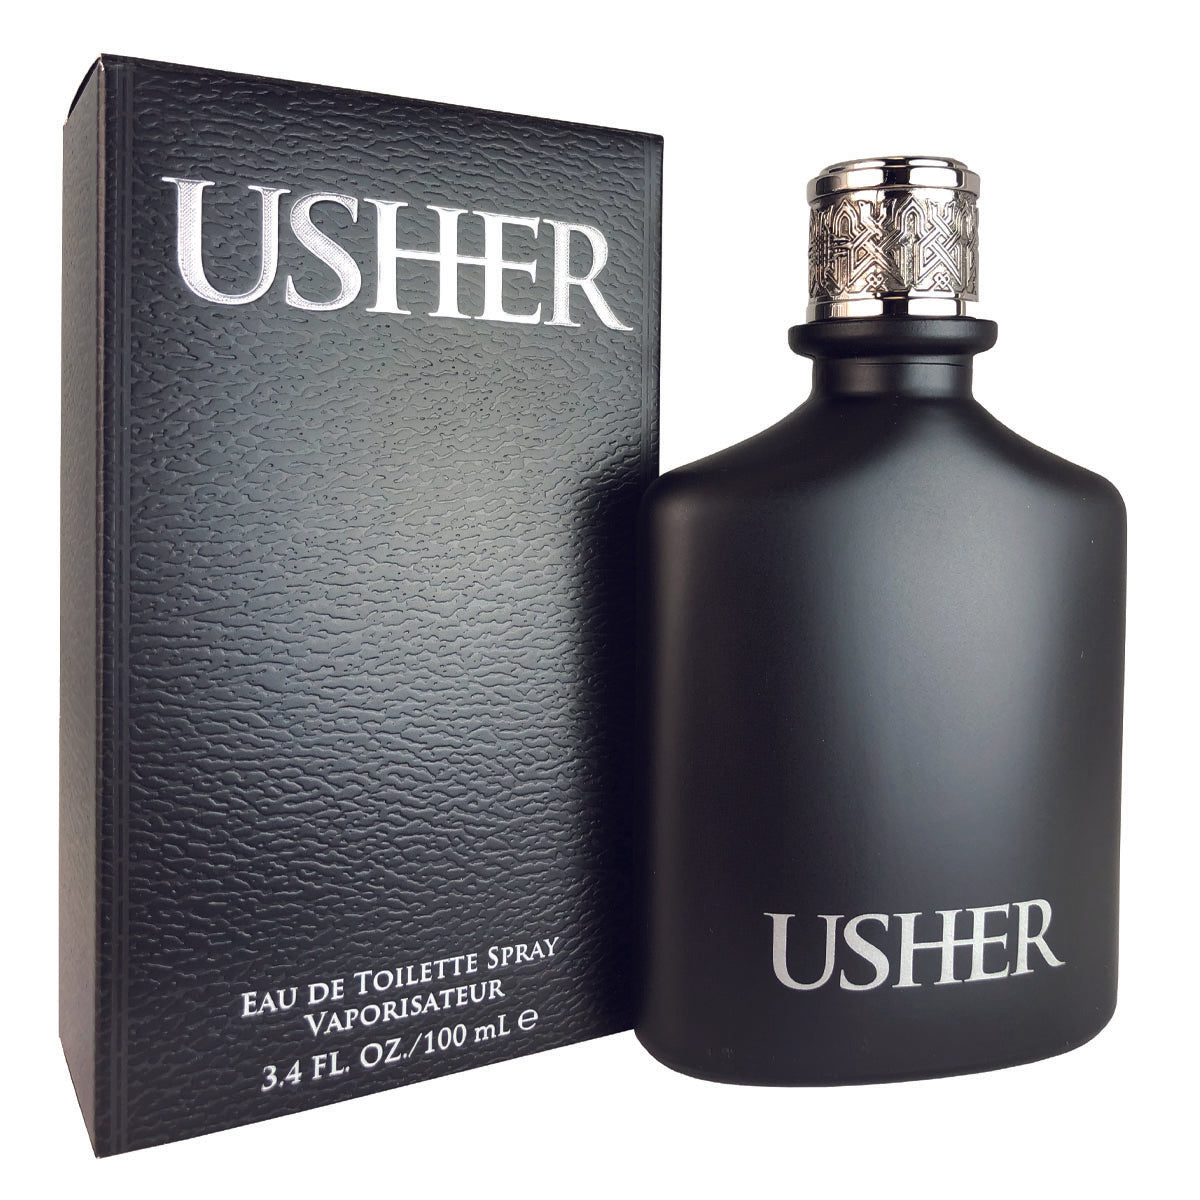 Usher for Men by Usher 3.4 oz Eau de Toilette Spray